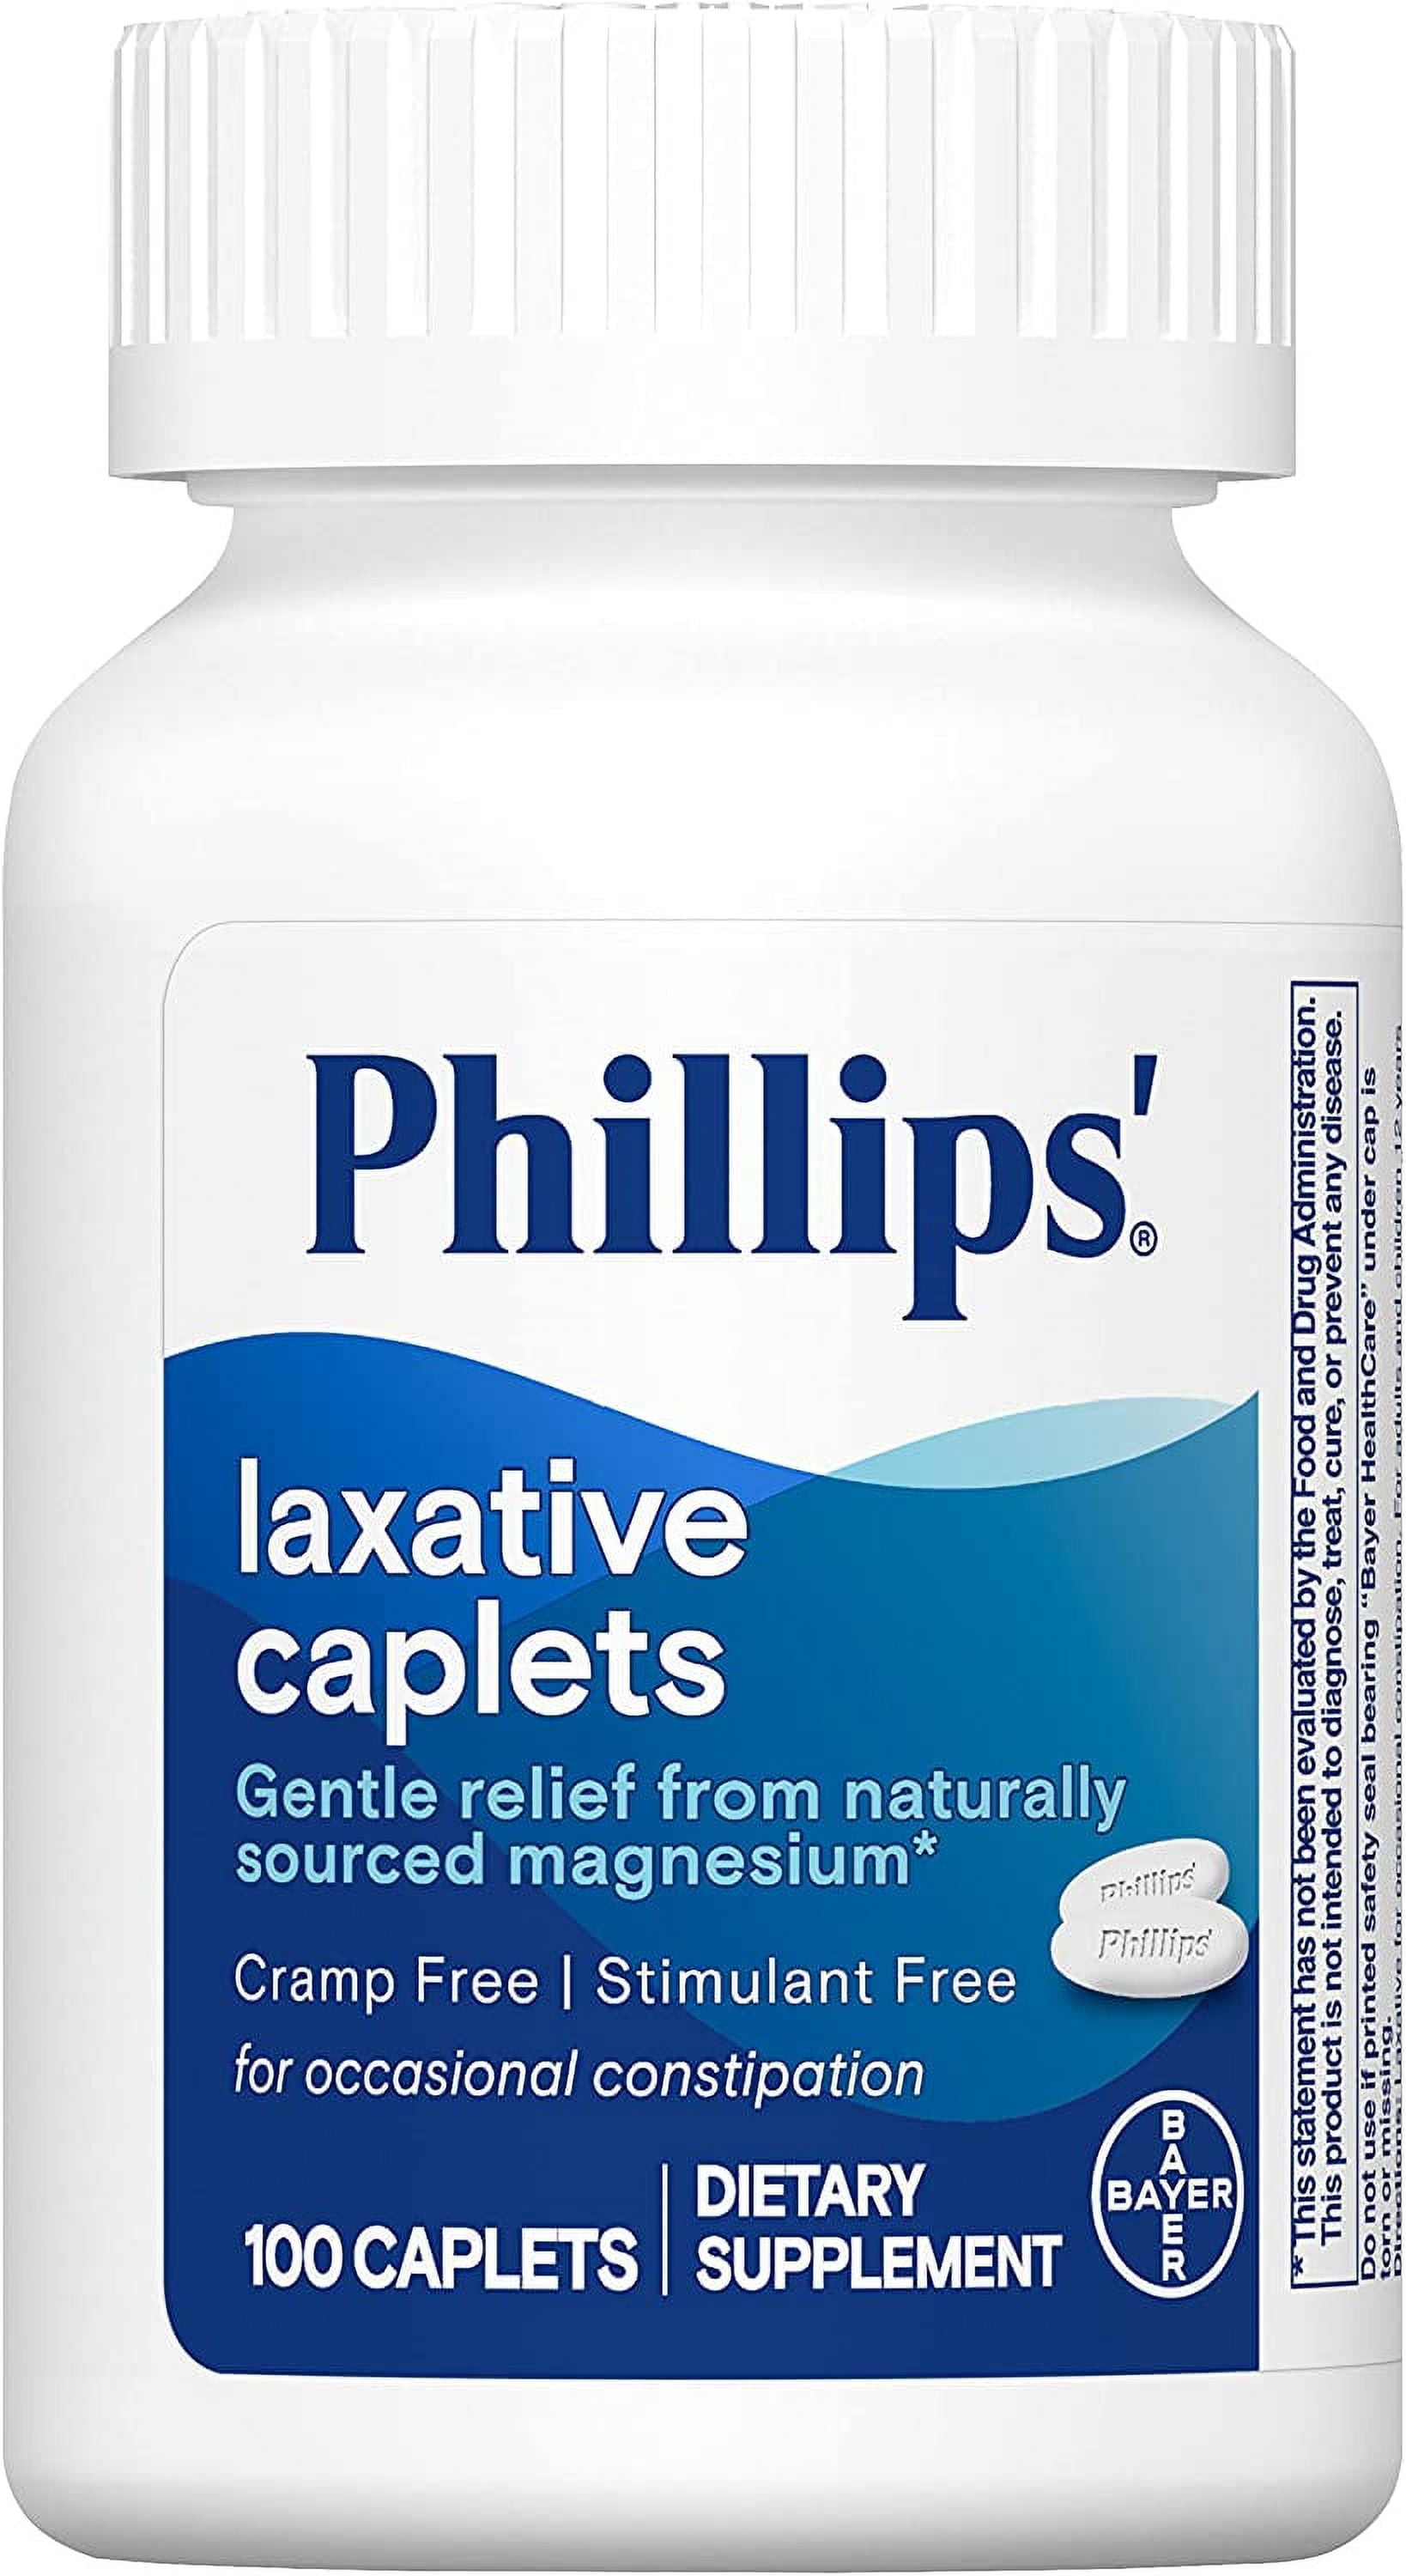 Phillips'® Laxative Caplets